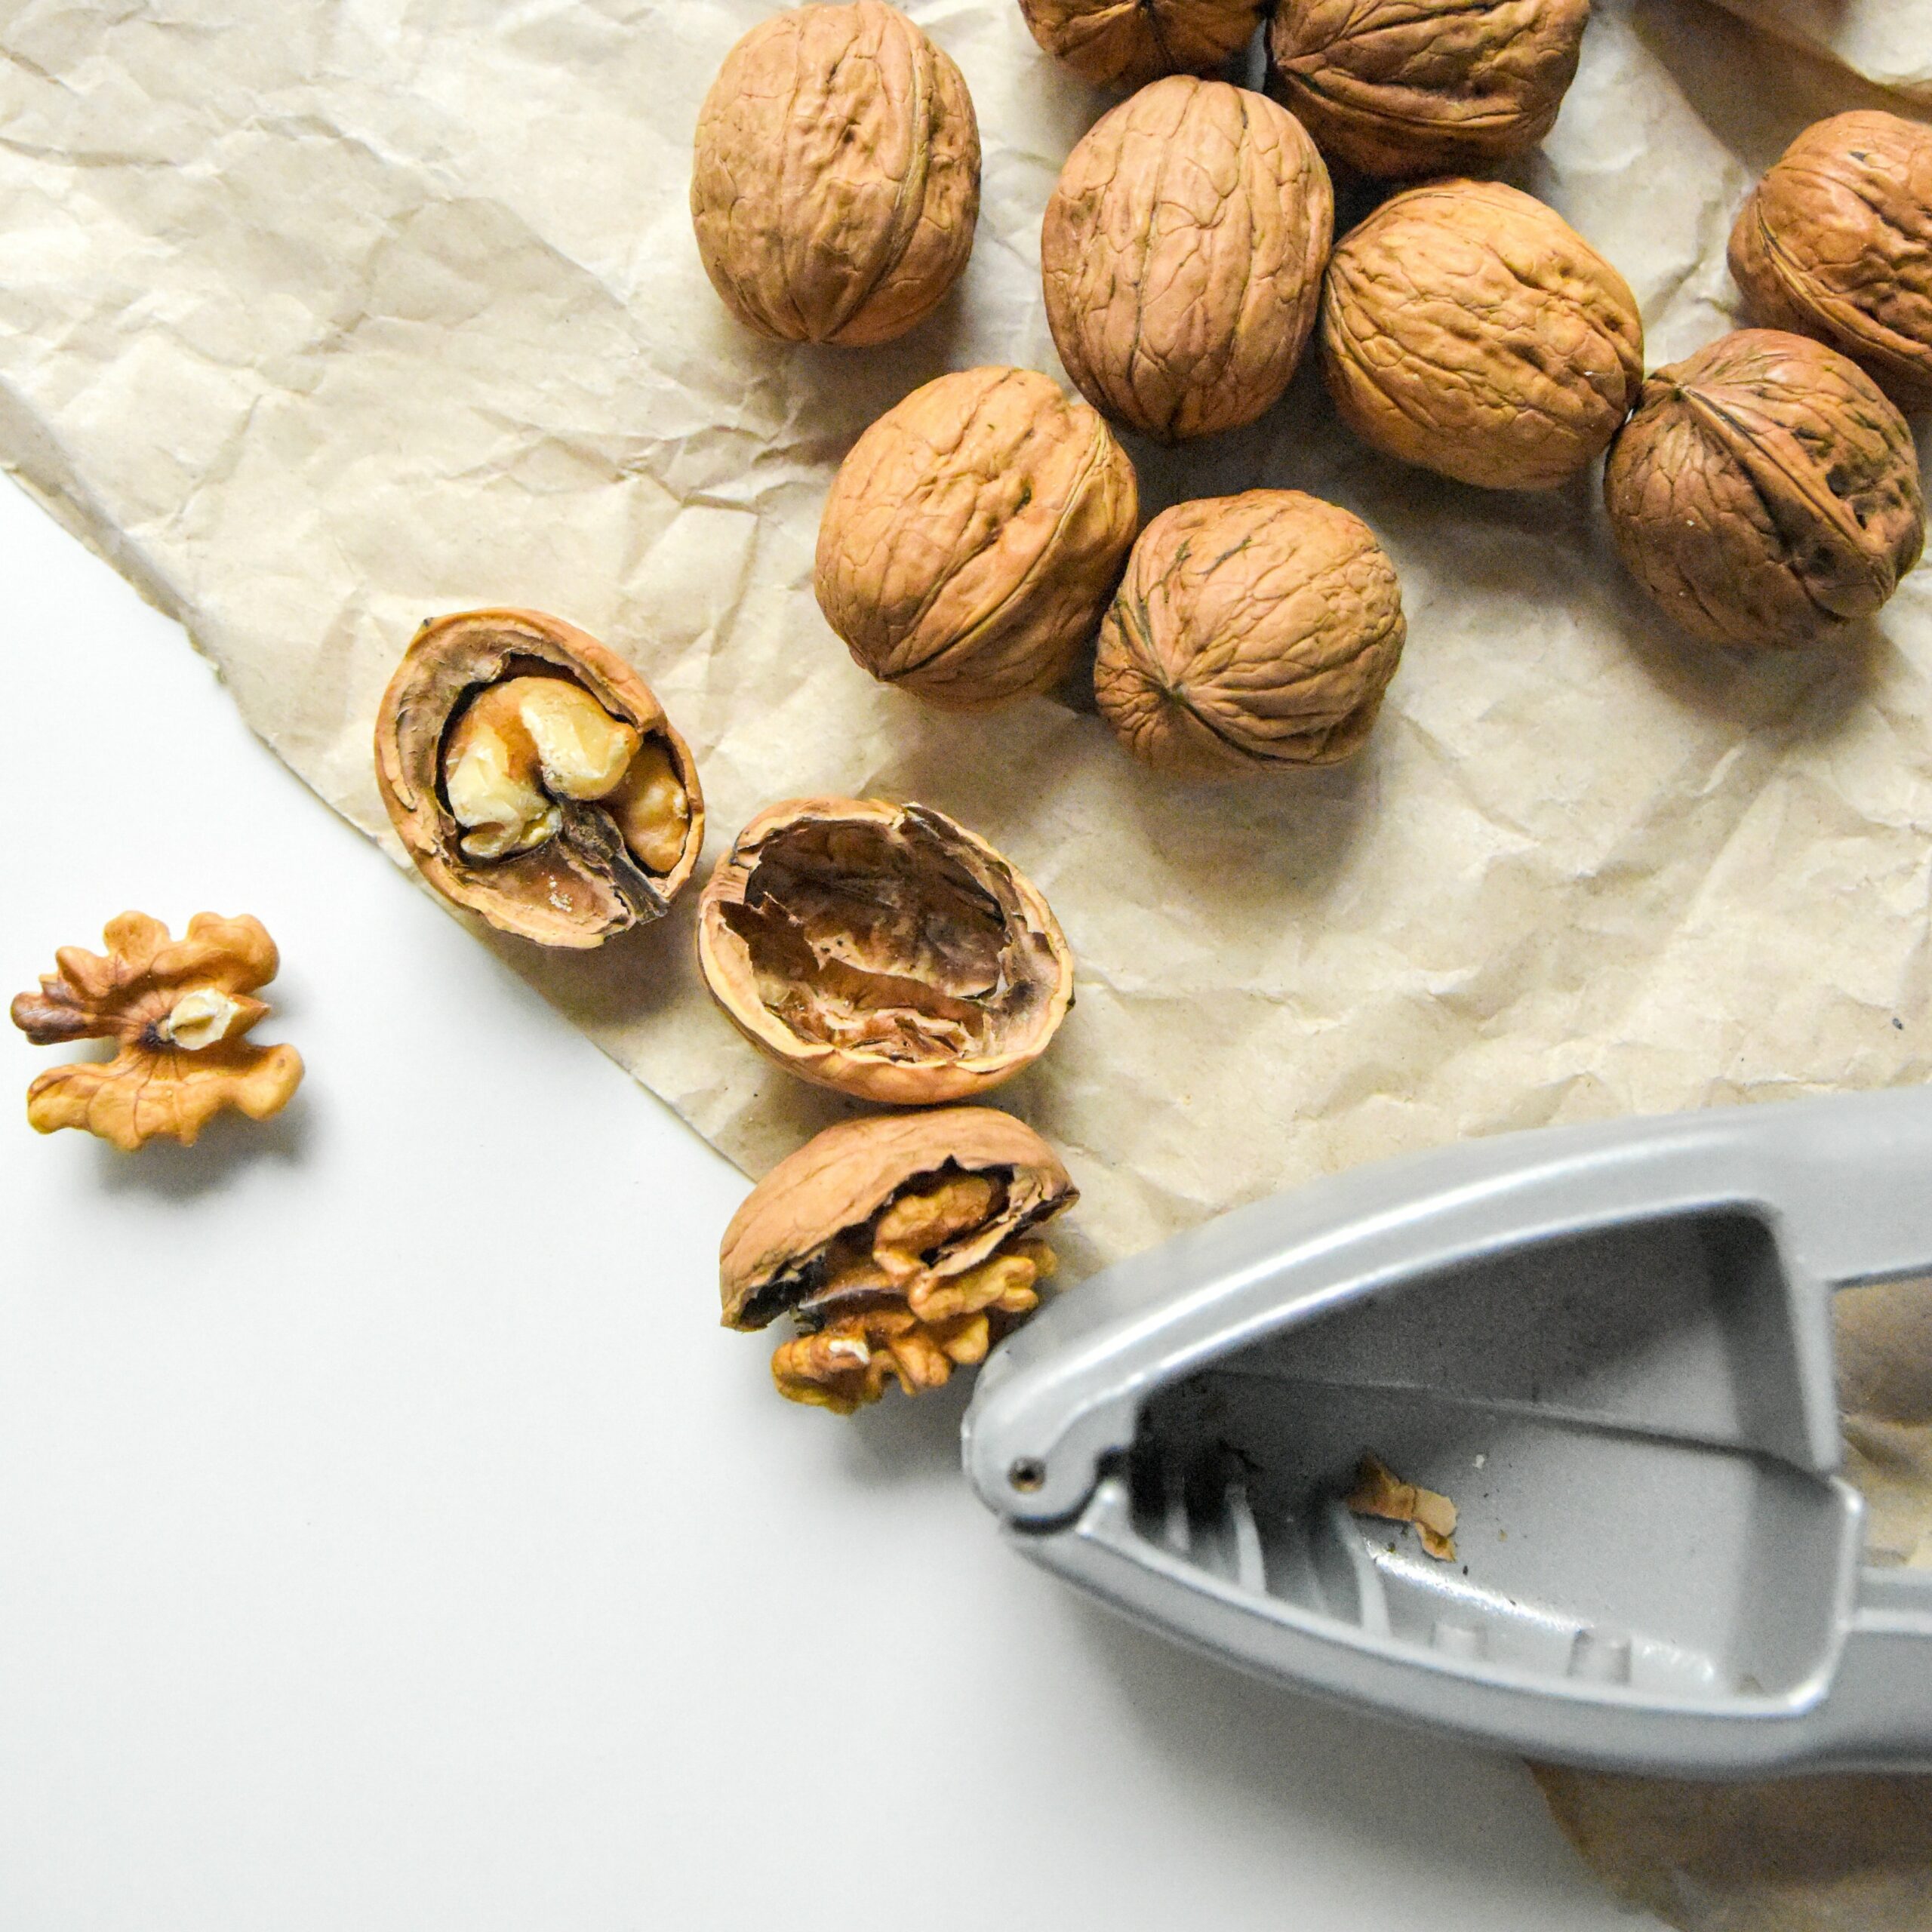 are walnuts gluten free